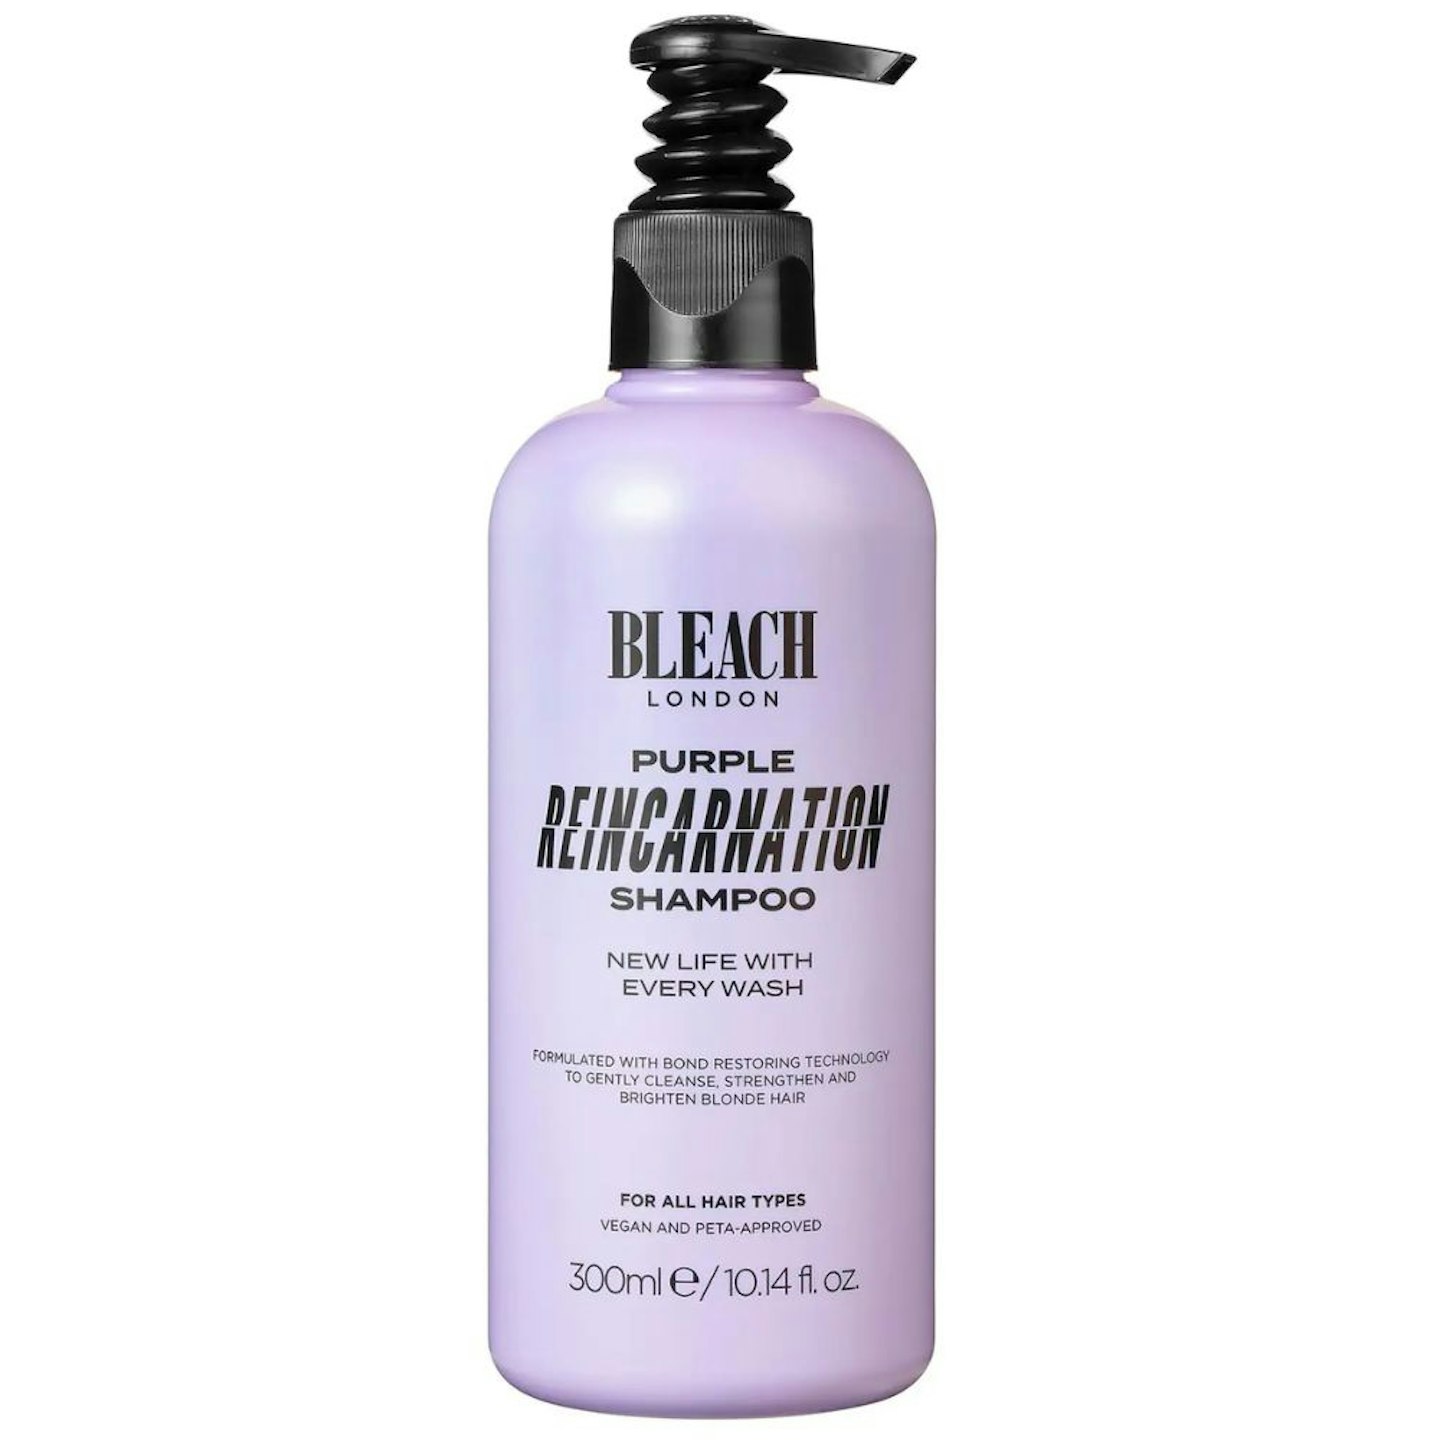 BLEACH LONDON Purple Reincarnation Shampoo